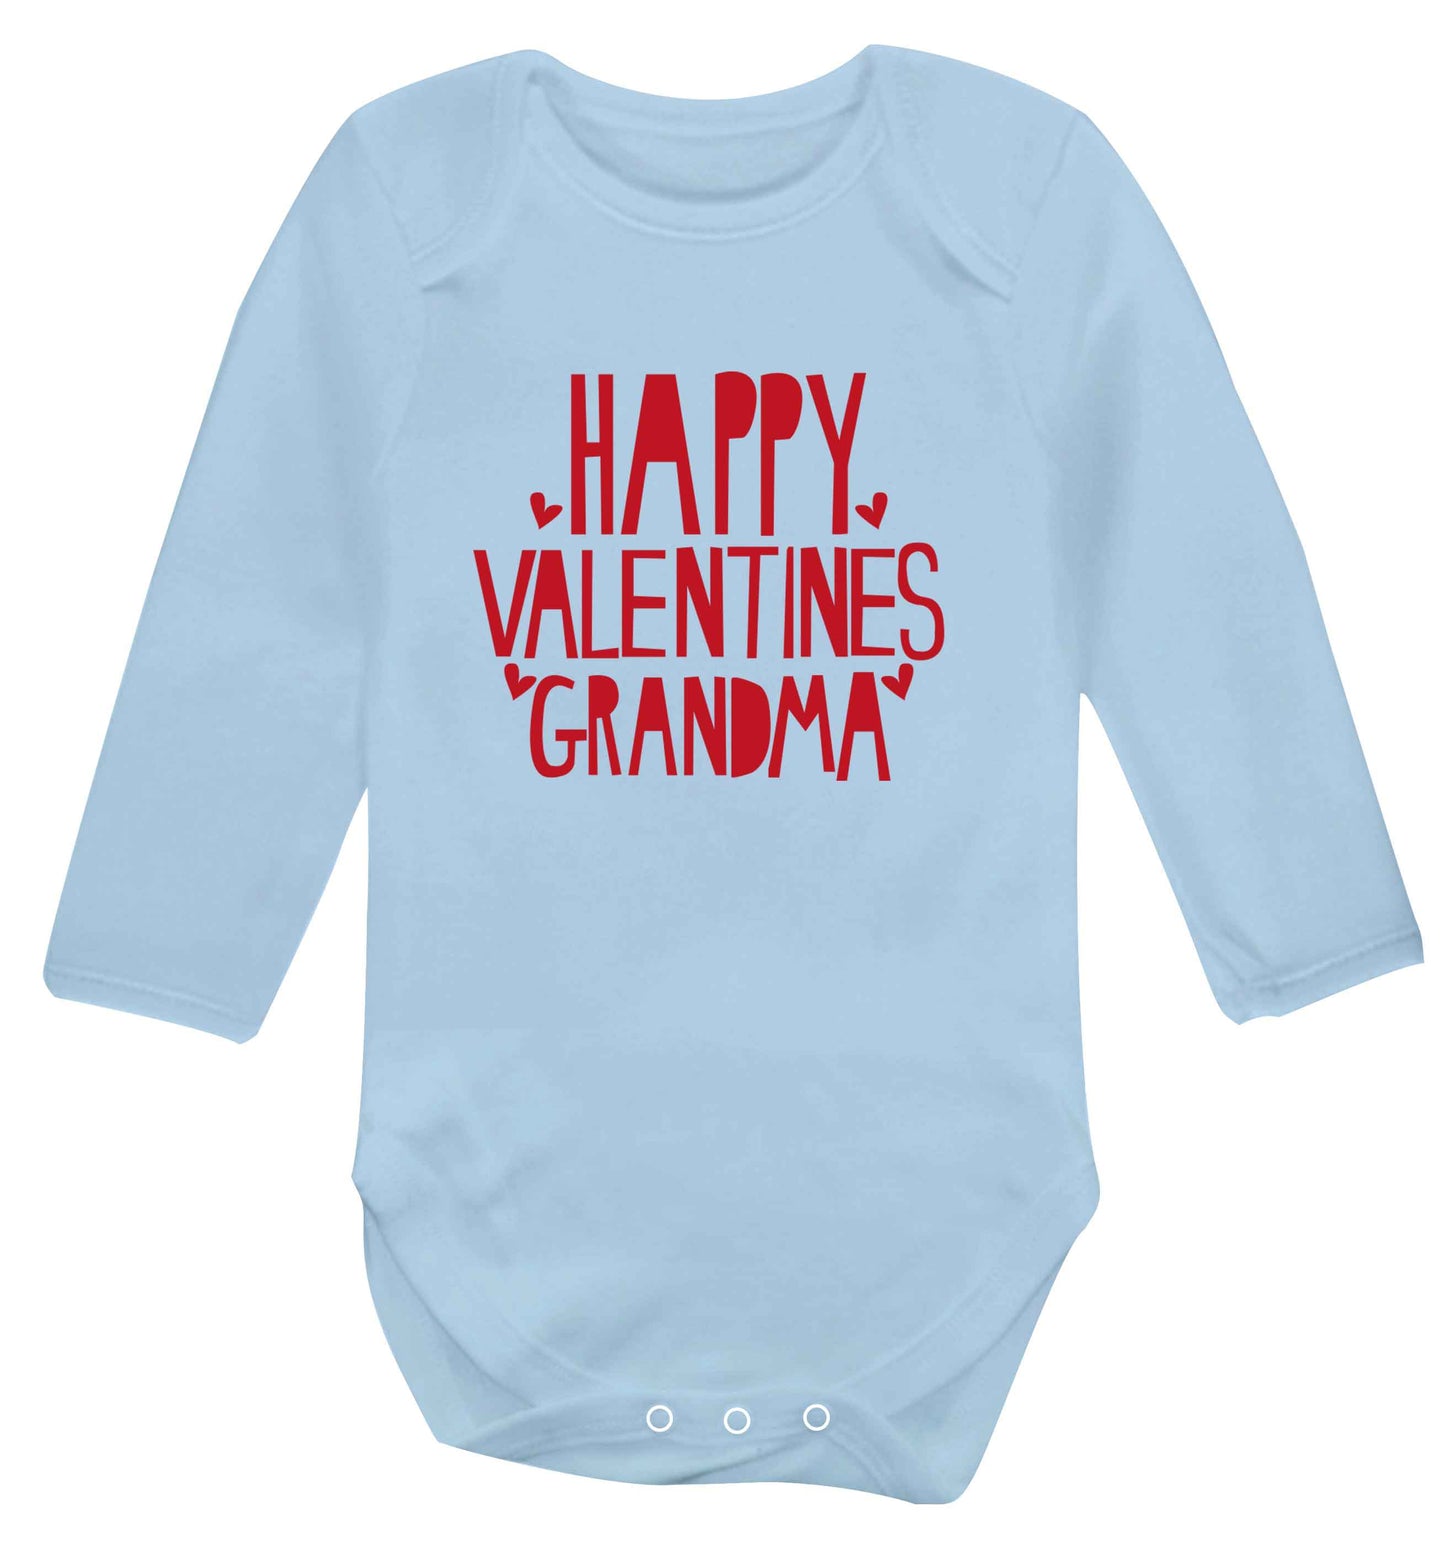 Happy valentines grandma baby vest long sleeved pale blue 6-12 months